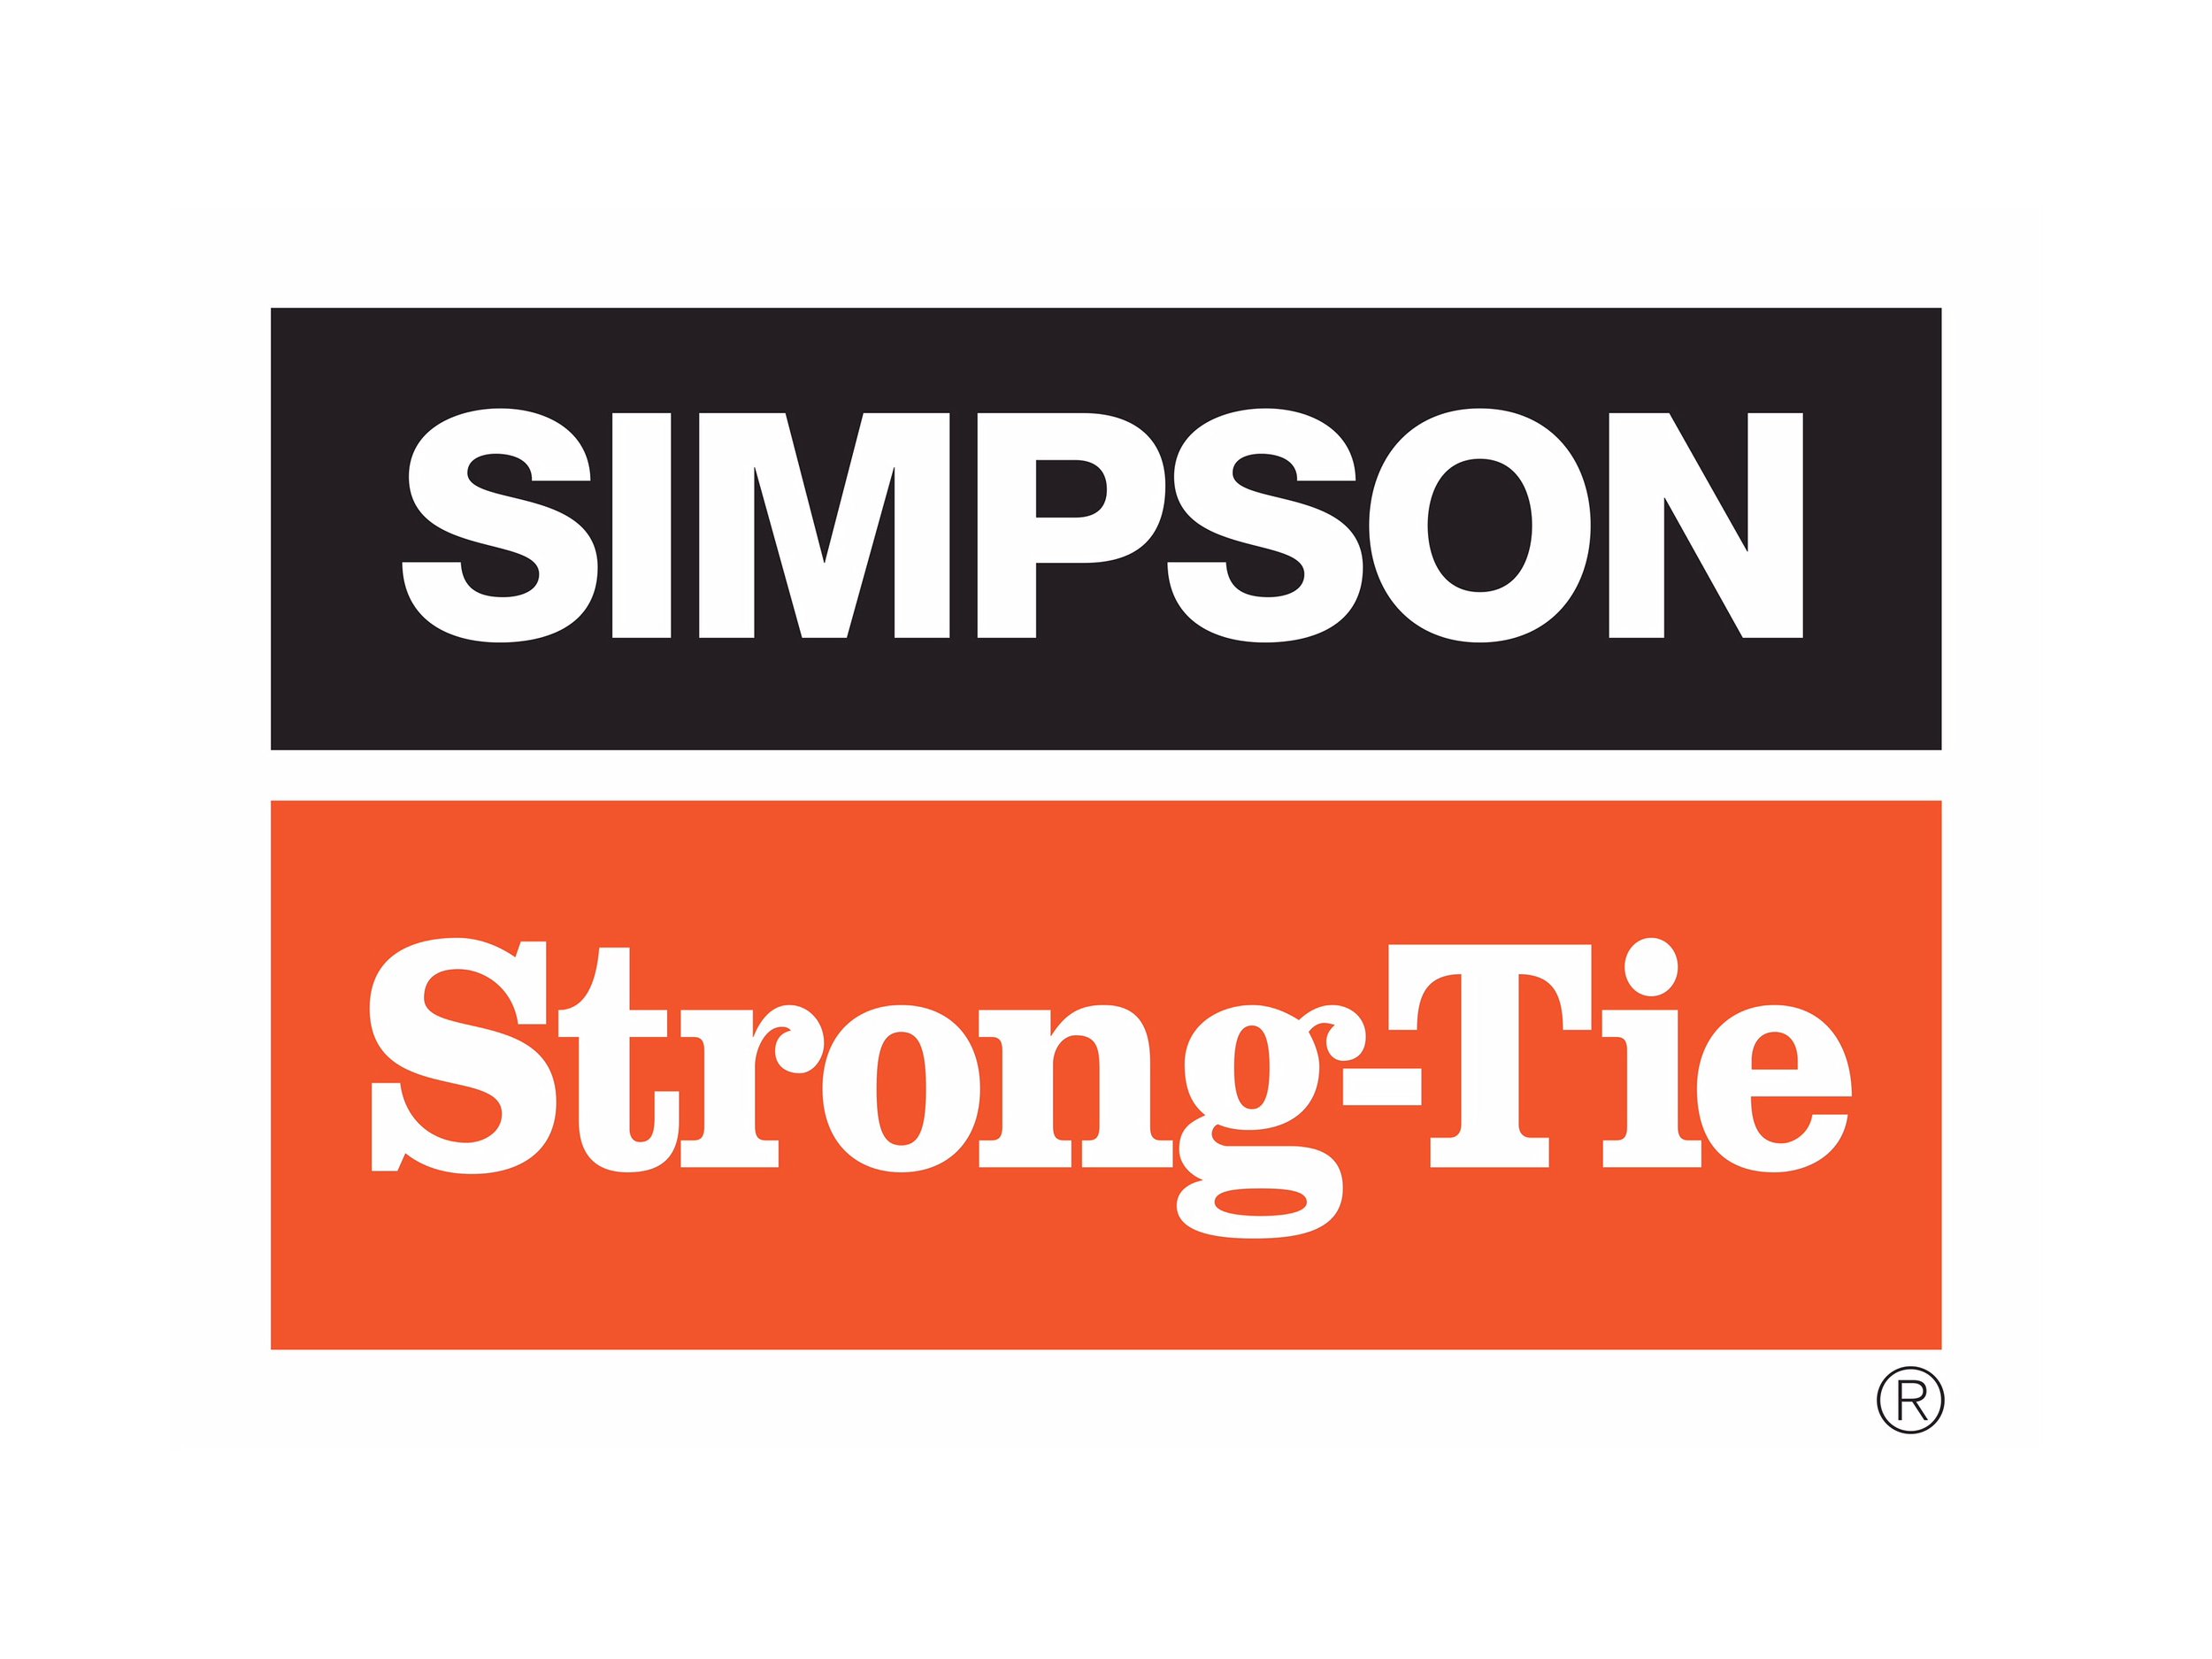 Simspon Strong Tie 2018.JPG